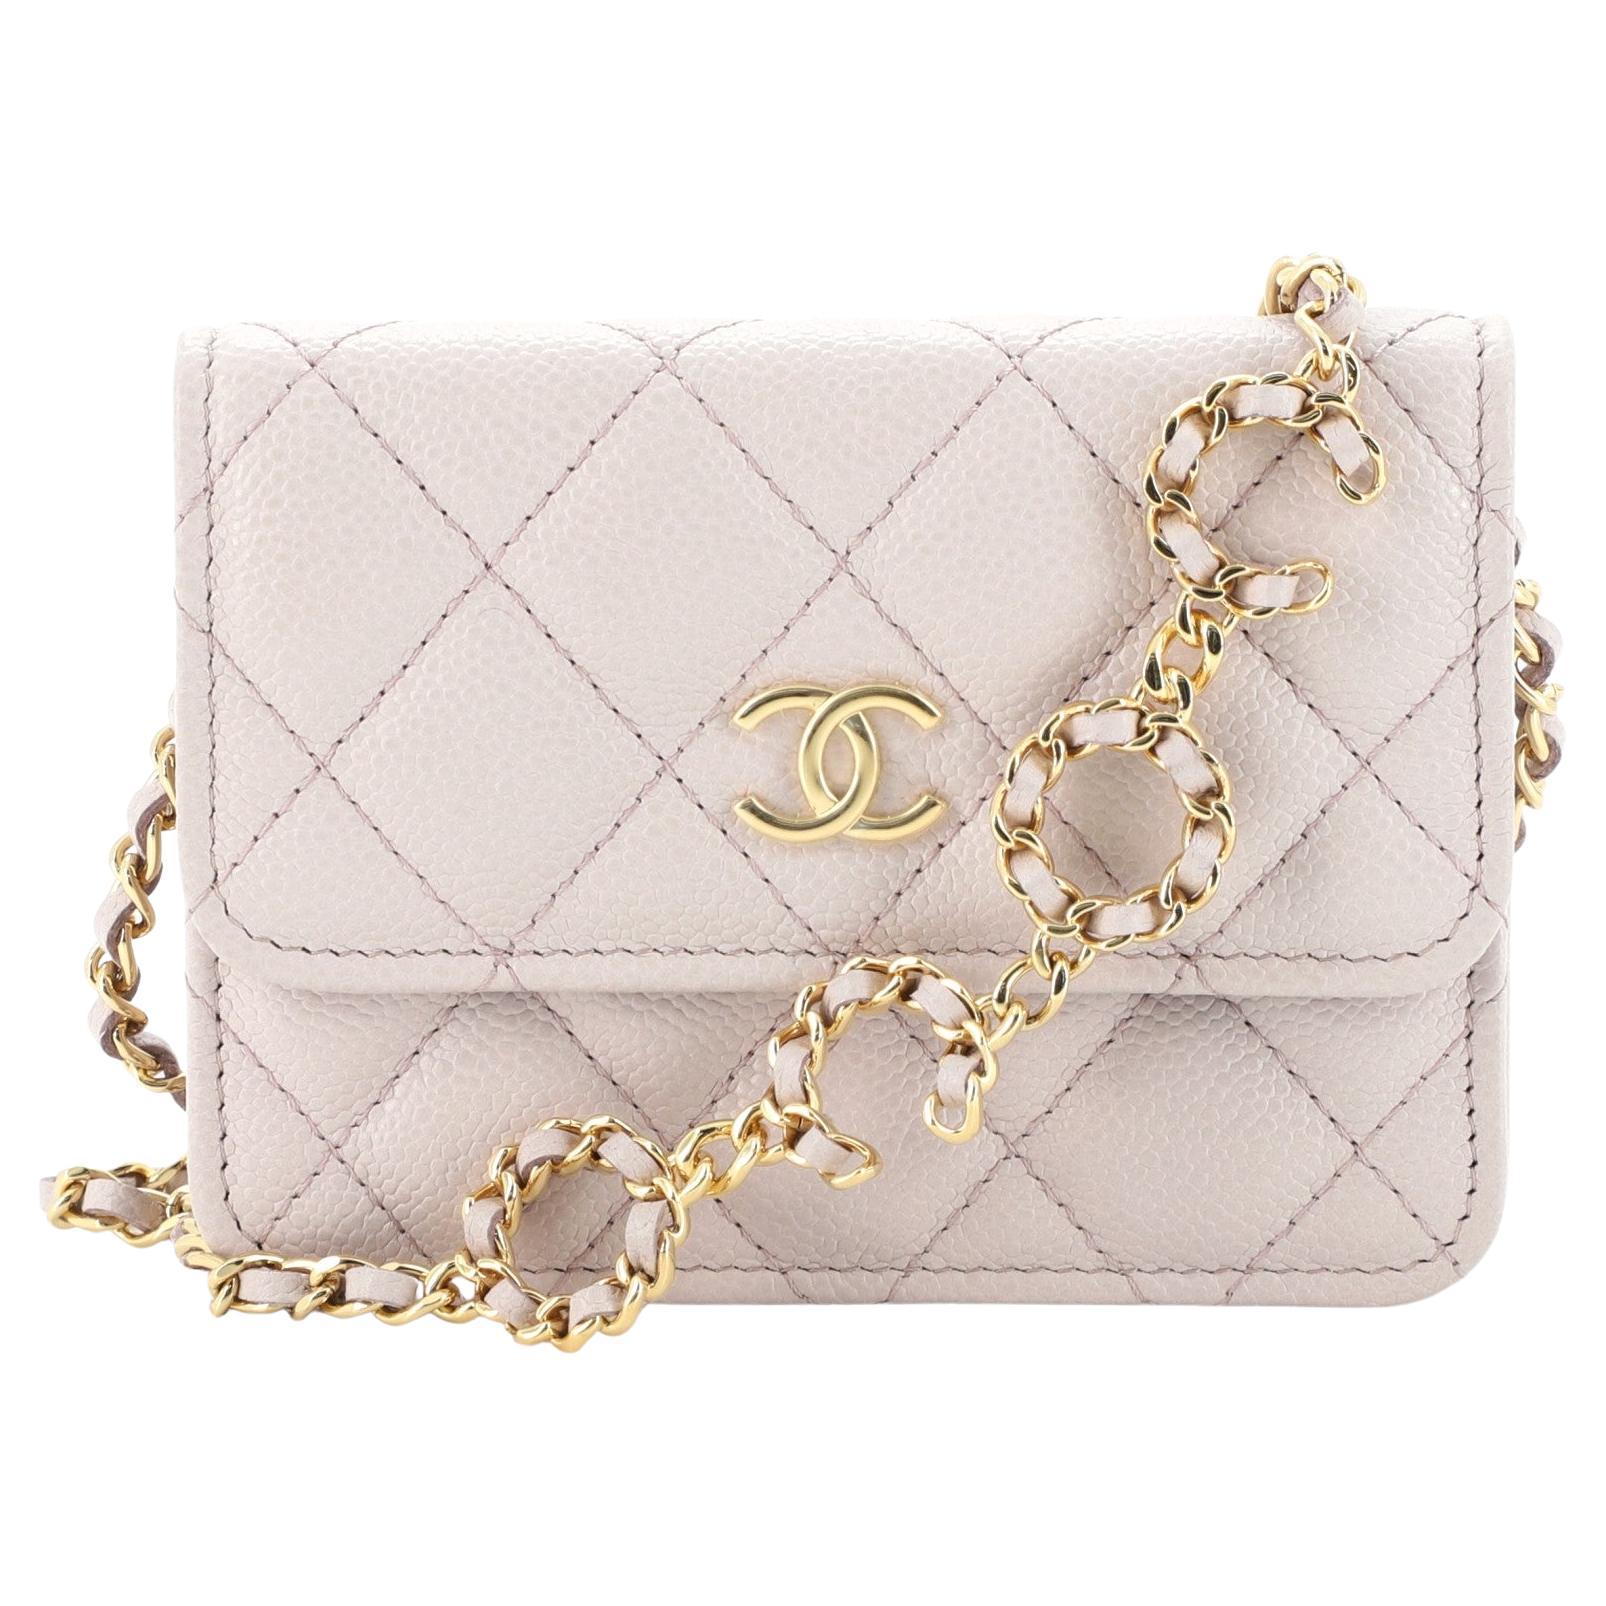 How To Distinguish Between an Original Chanel Handbag and a Fake